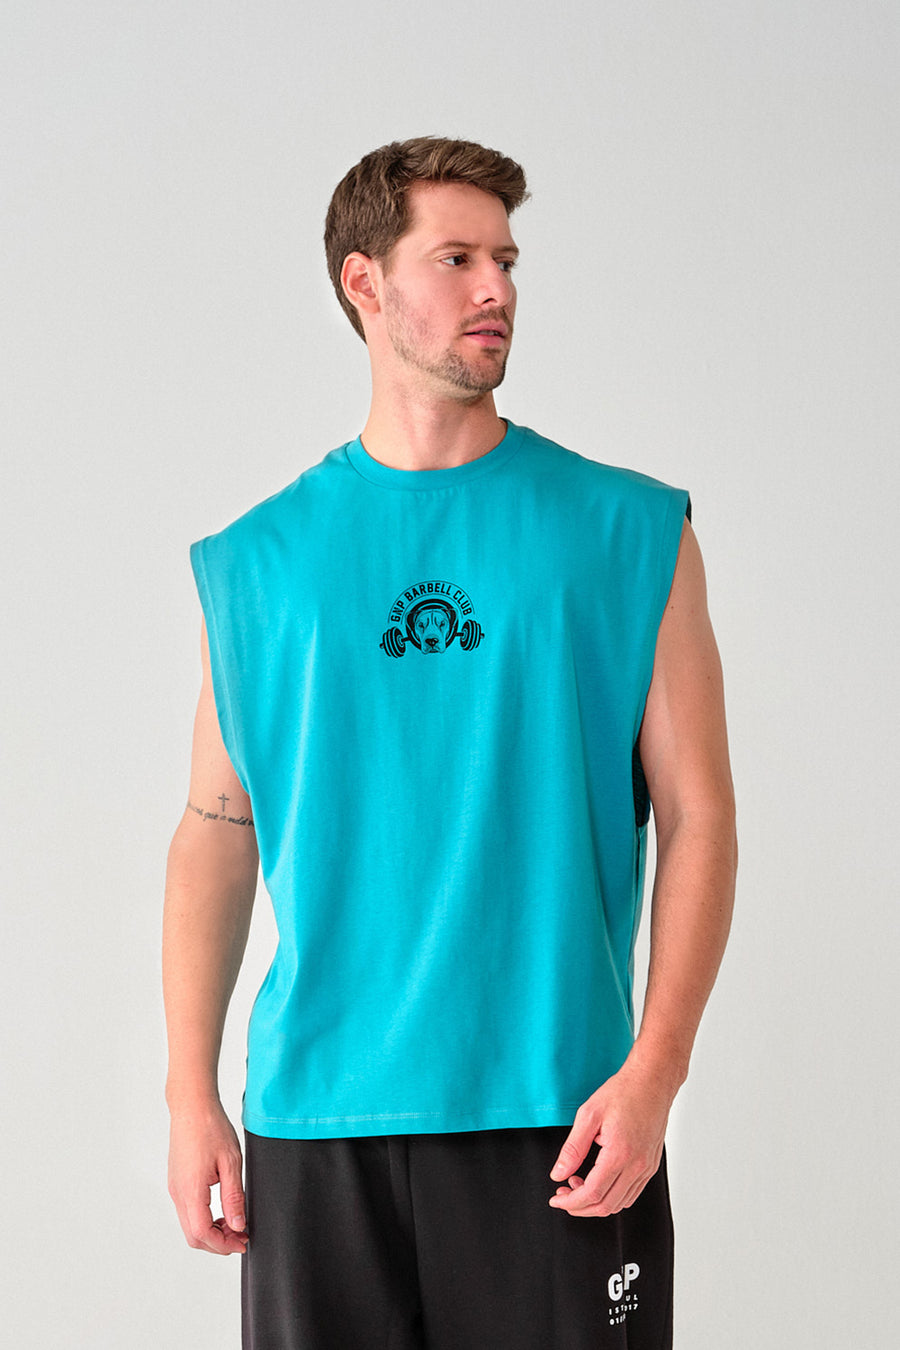 GNP Barbell Club Sleeveless Turquoise Tshirt